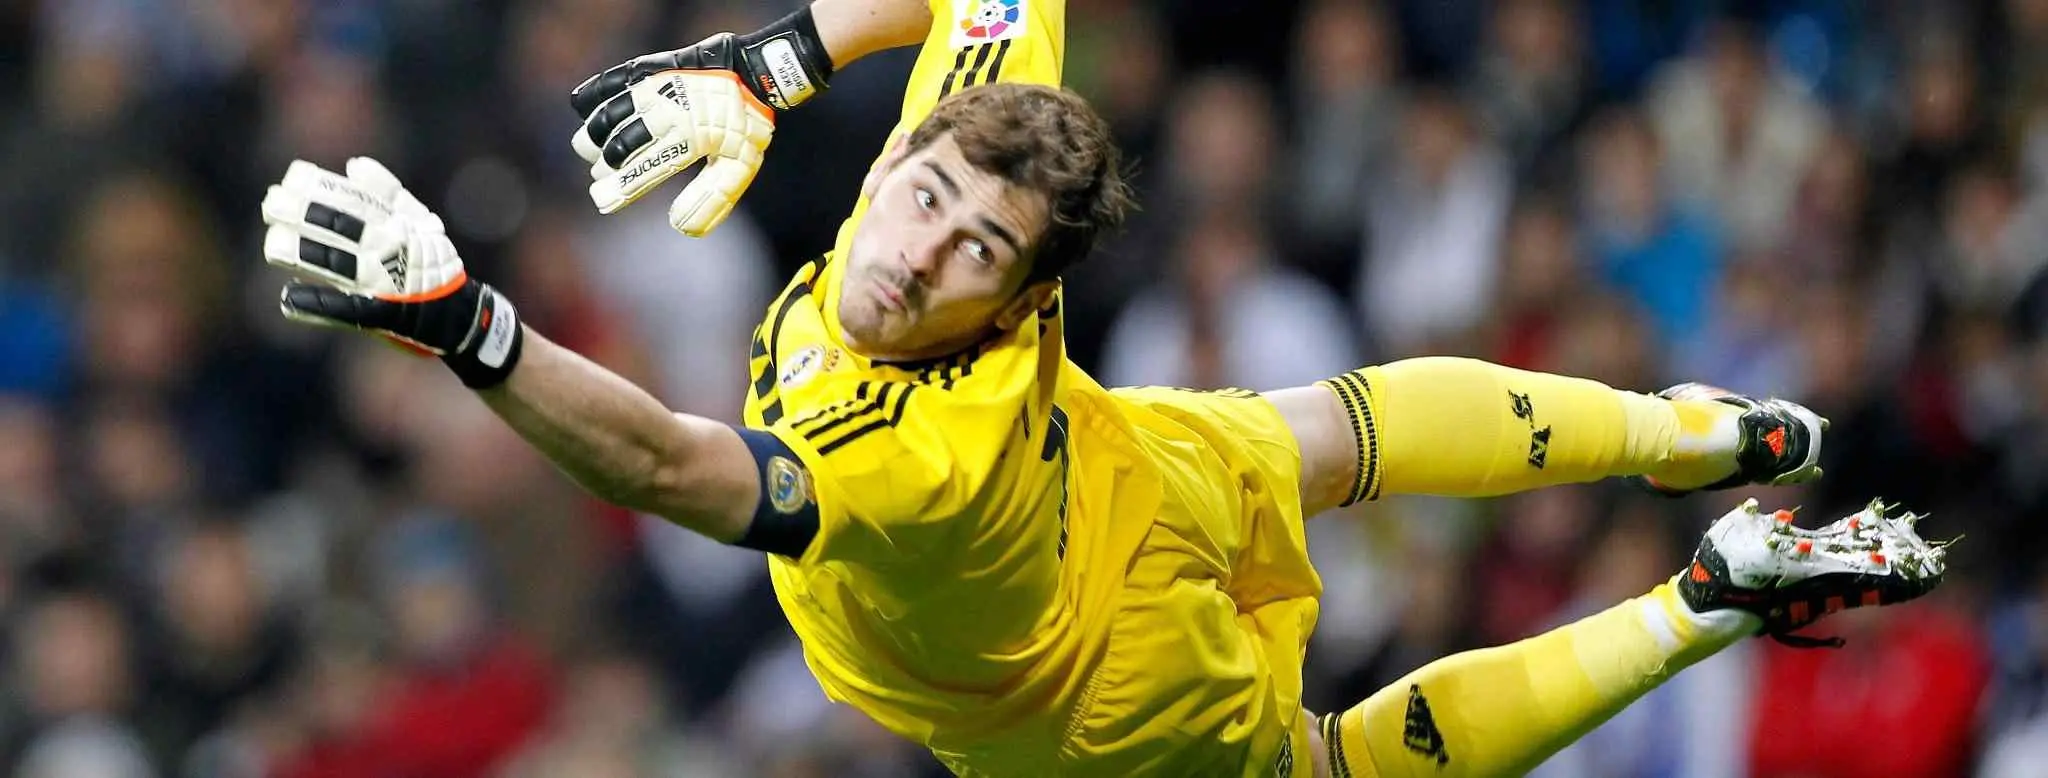 El Madrid aprieta a Iker Casillas: De Gea o Leno serán titulares en 2015-16